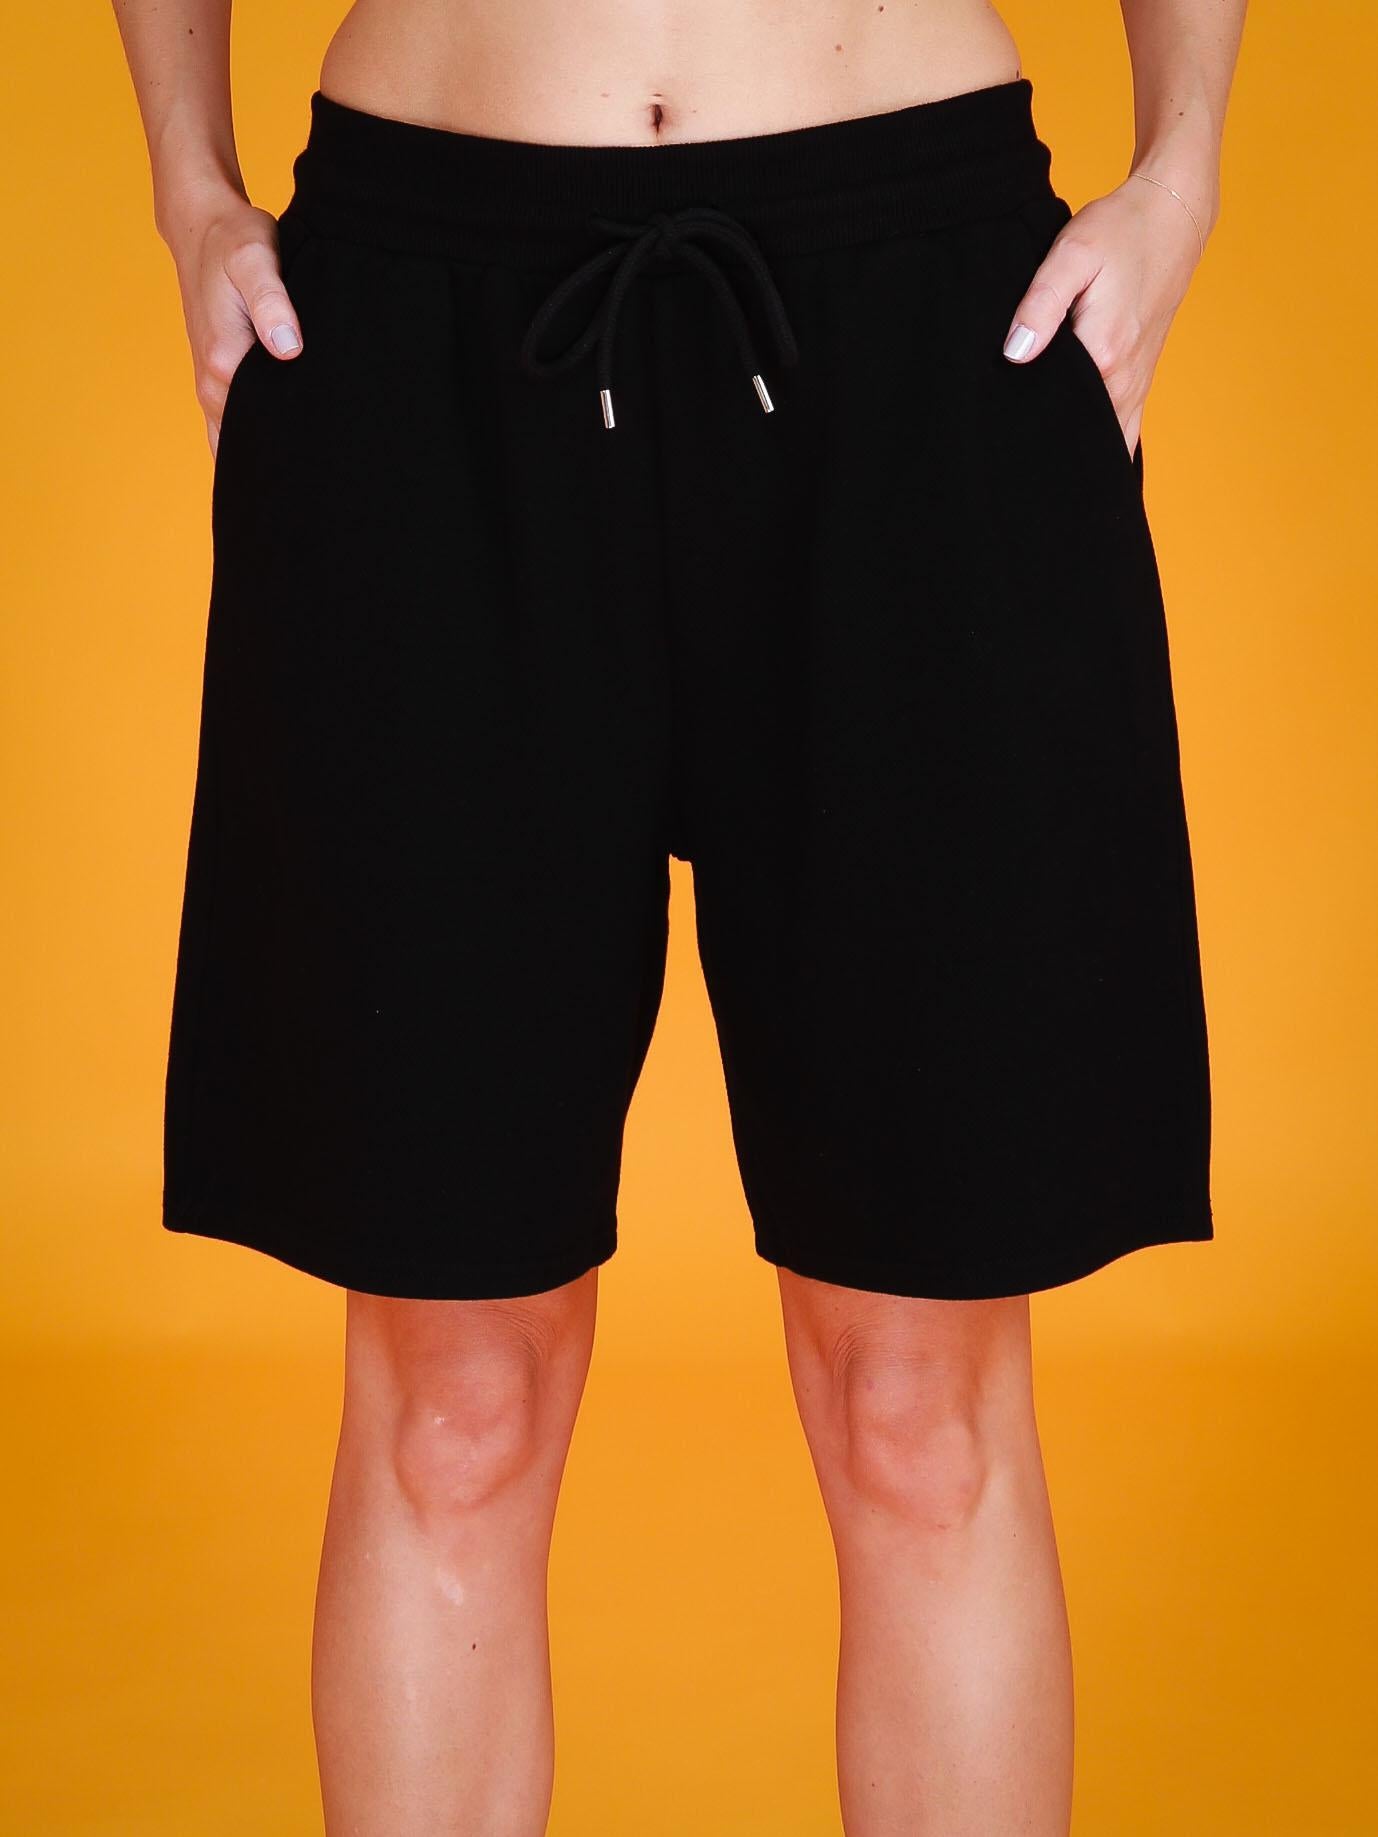 Women's Black Shorts